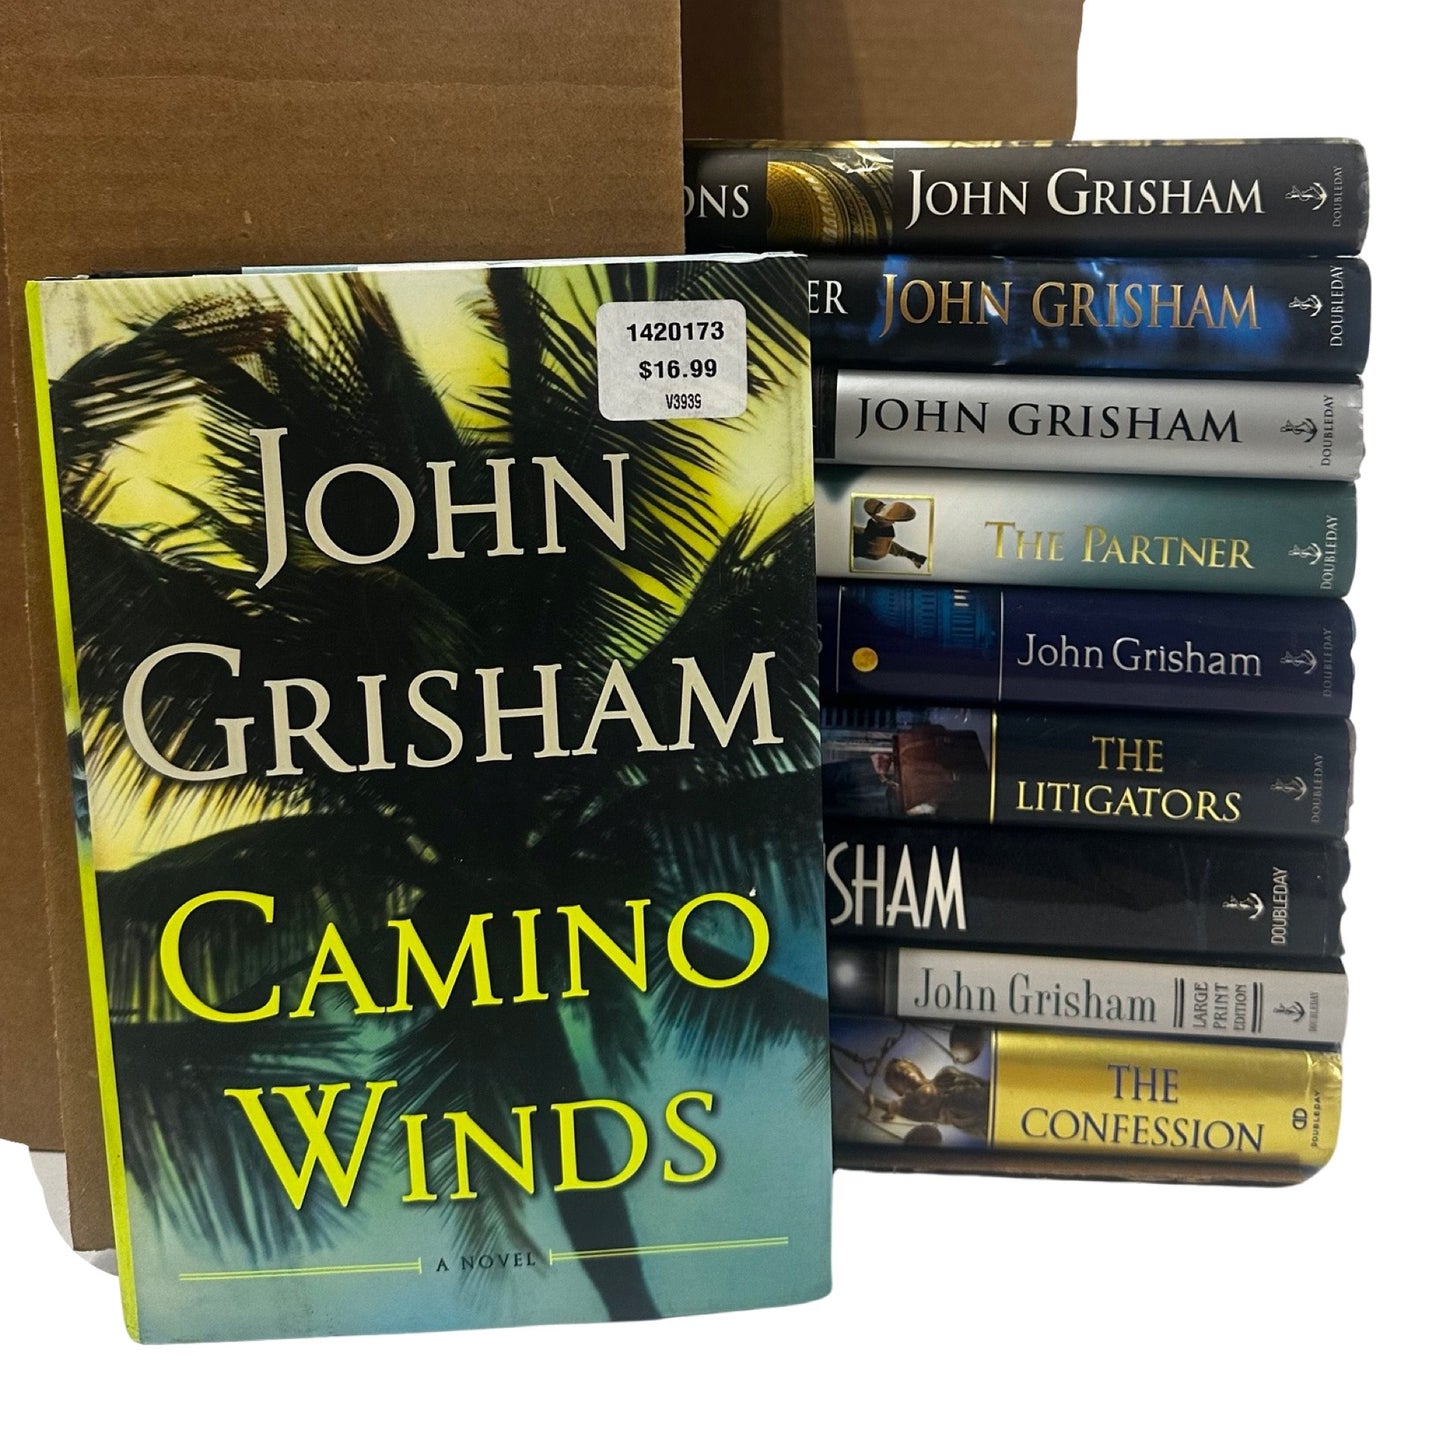 John Grisham books - Hardcovers